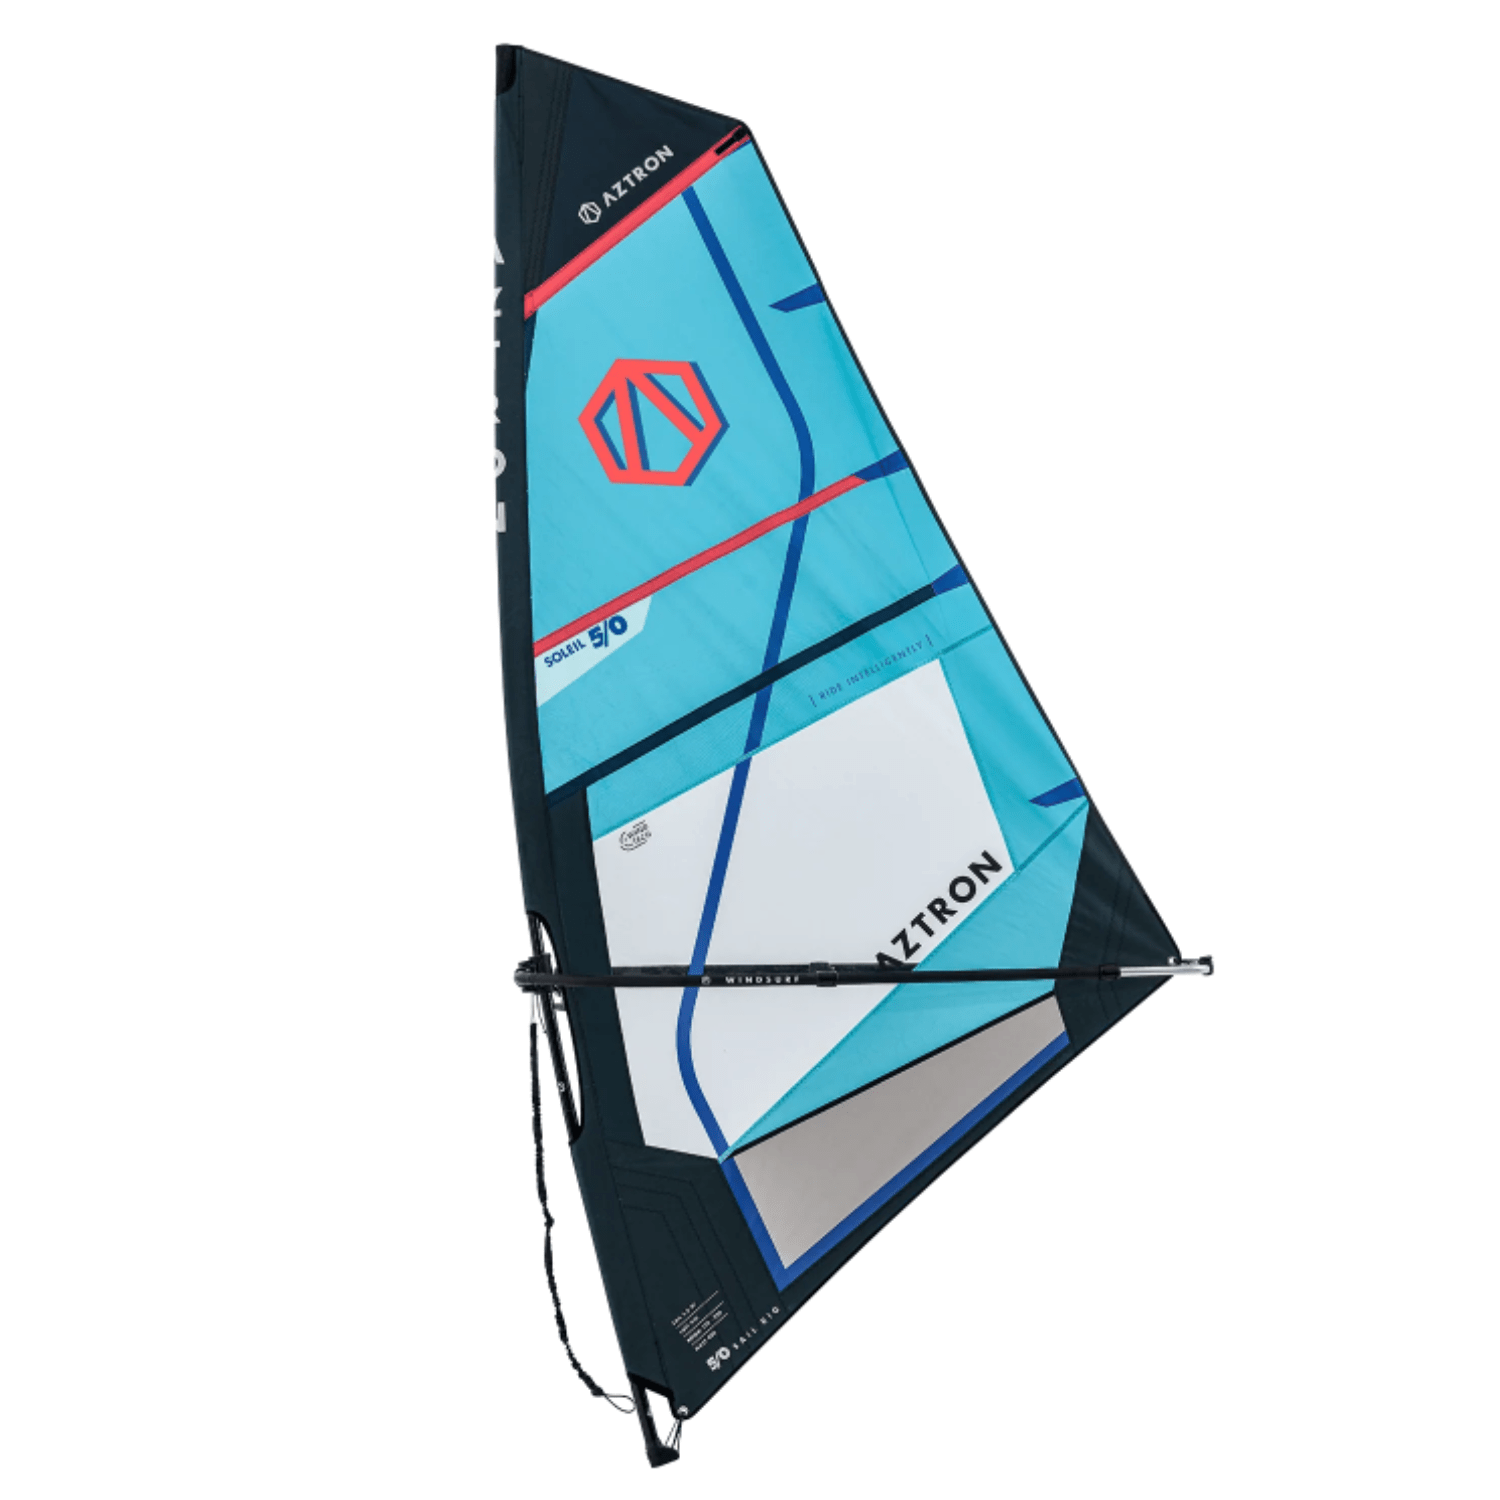 Aztron Soleil Windsurf Sail Rig 5.0-Wind Surf-Aztron Sports-1